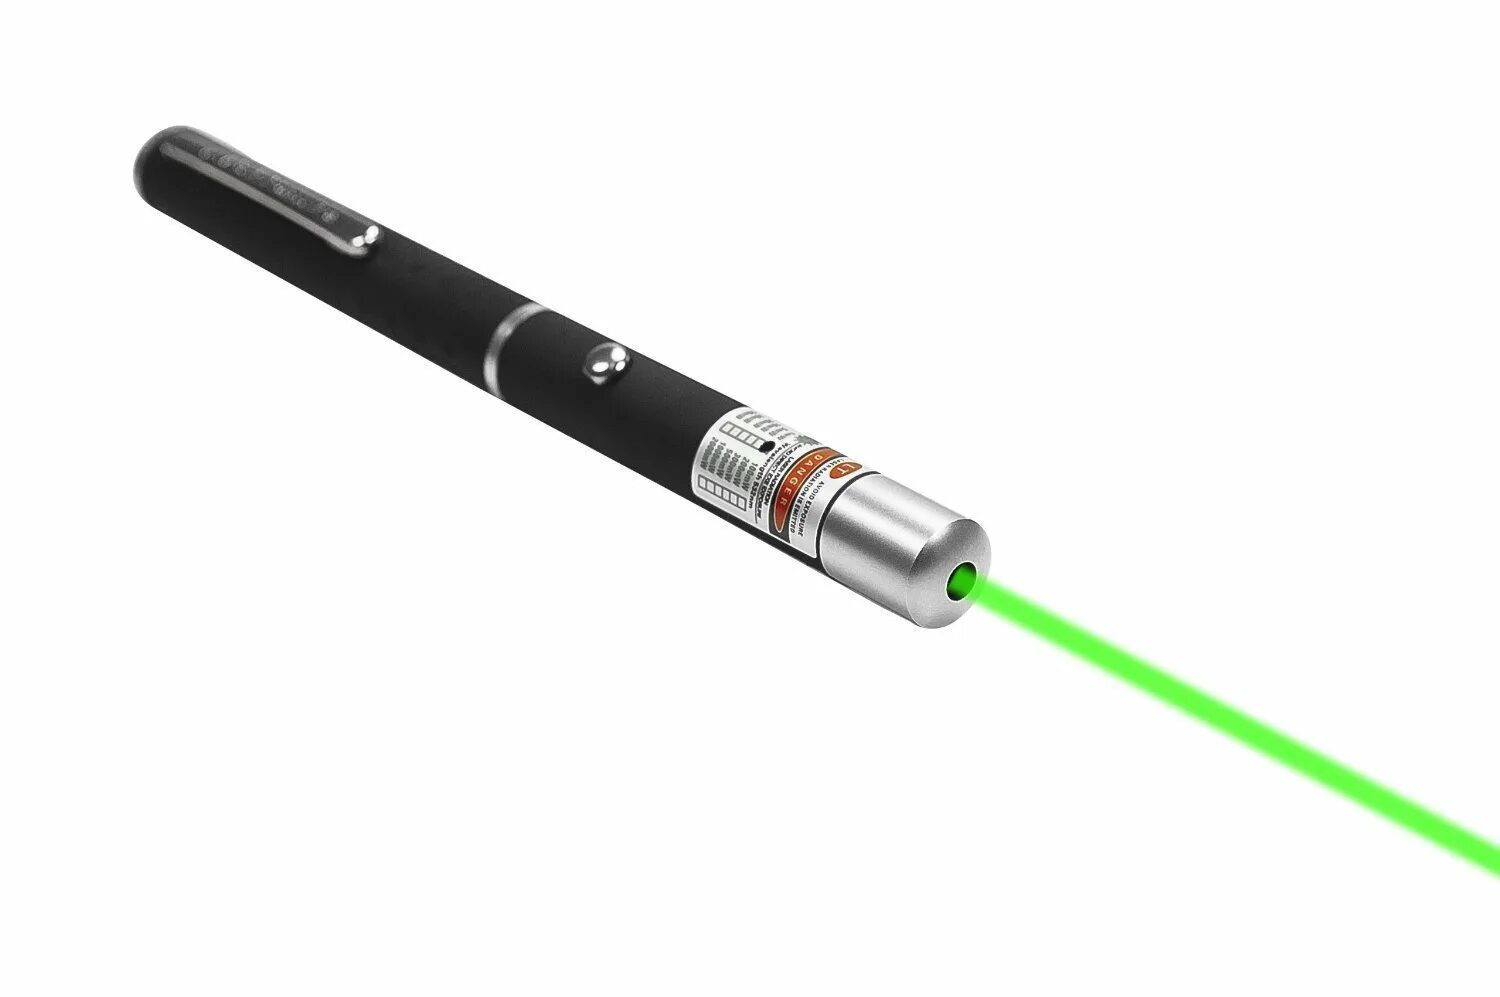 Ответ указка. Лазерная указка Green Laser Pointer (SD-5-1). Лазерная указка Laser Pointer l04-1 1 насадка зеленый Луч Black 876379. YYC-303 лазерная указка. Лазерная указка SD-03-3.